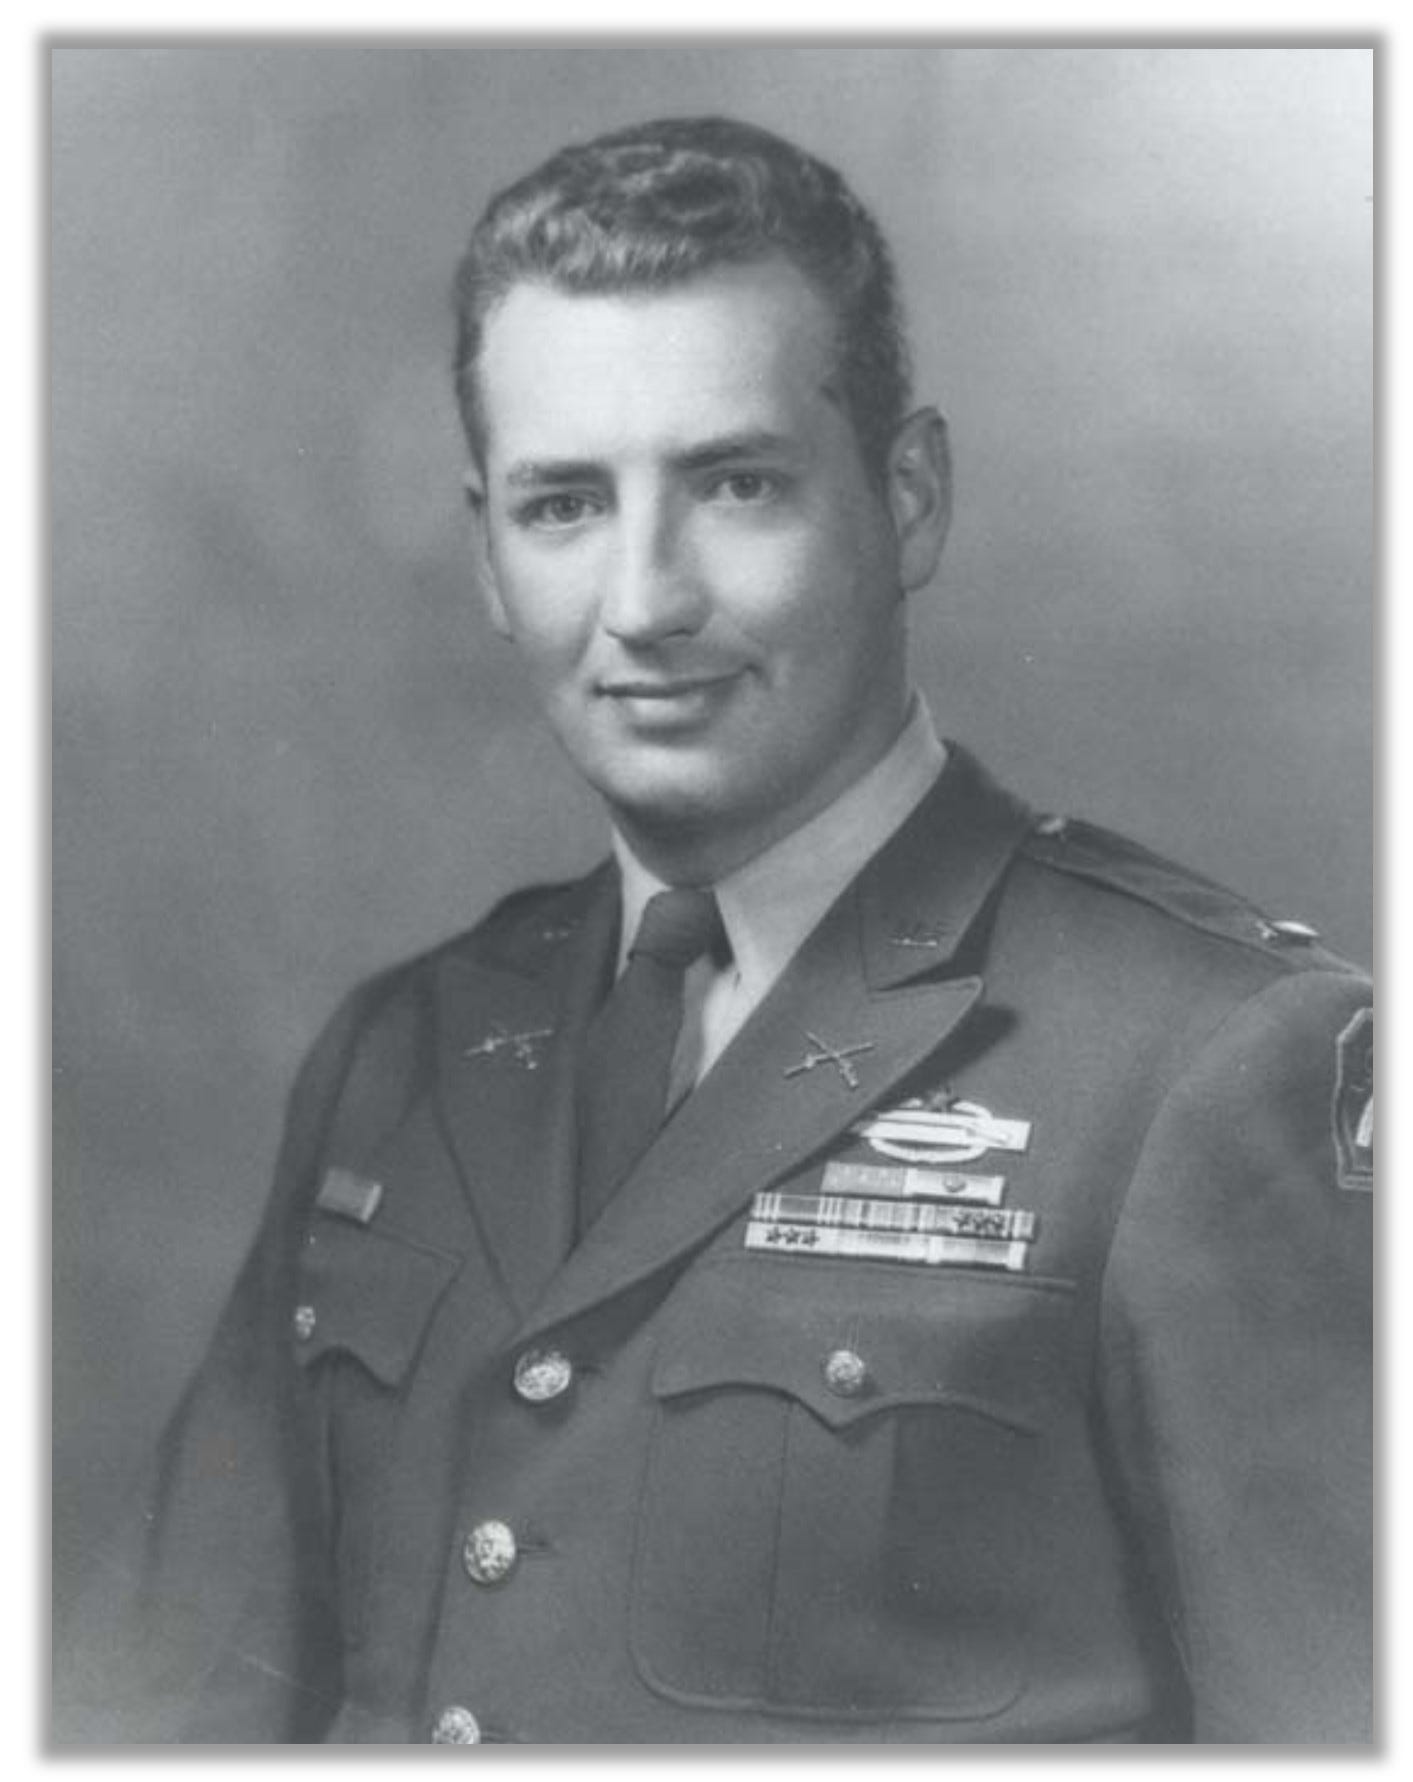 Headshot of Adams, in uniform.